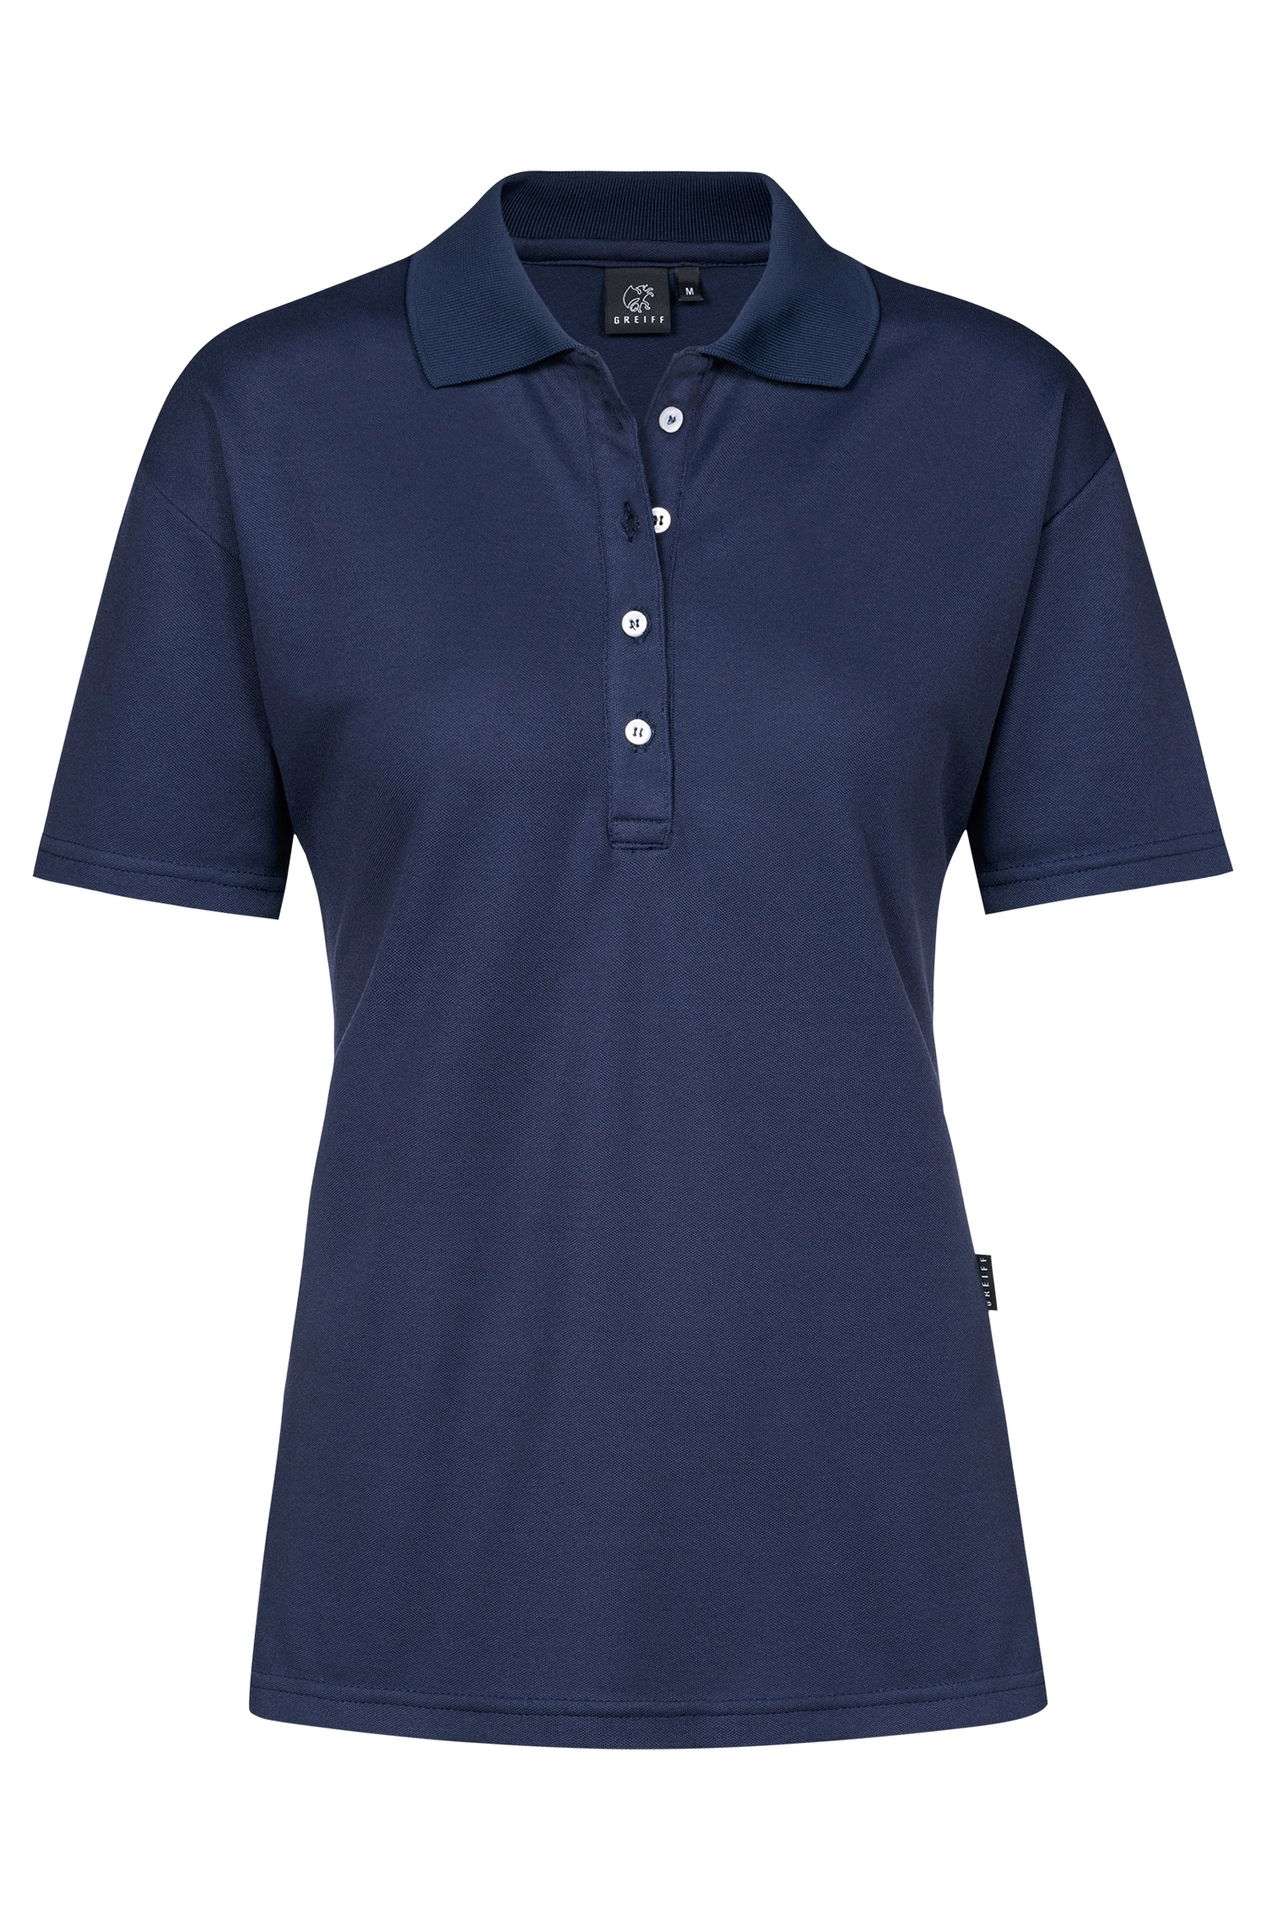 Damen-Poloshirt RF Shirts